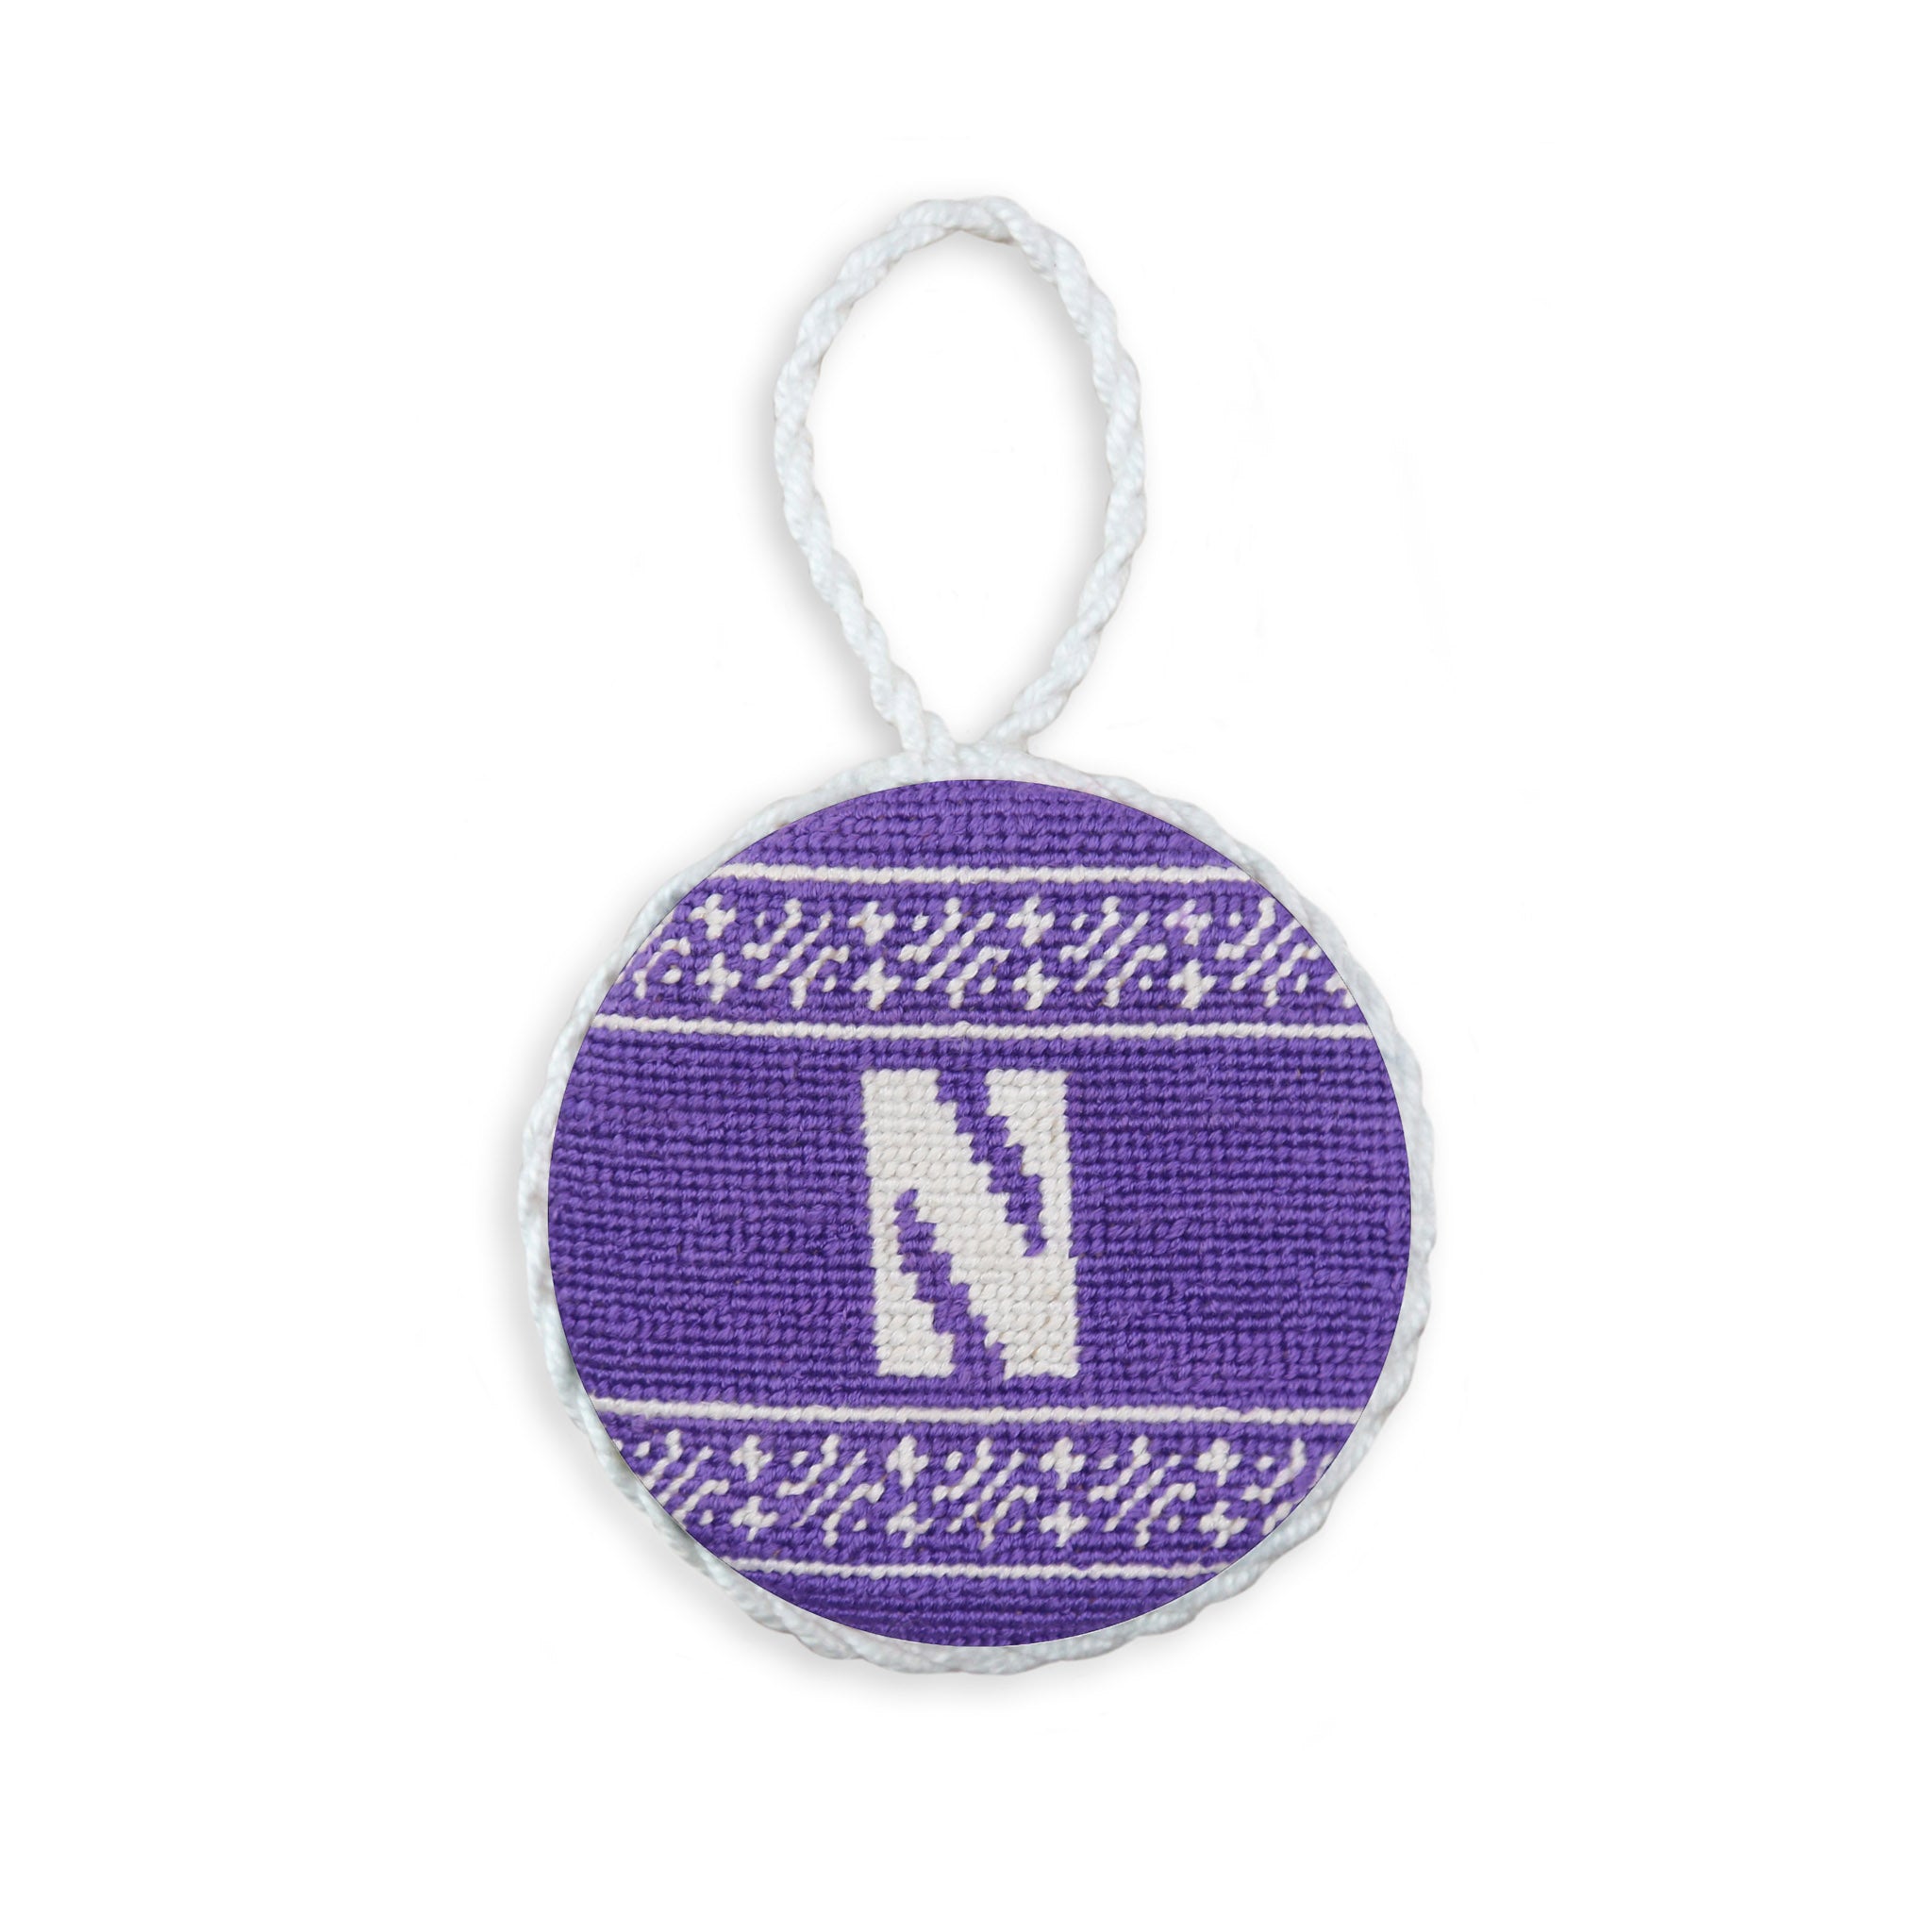 Smathers and Branson Northwestern Needlepoint Ornament 